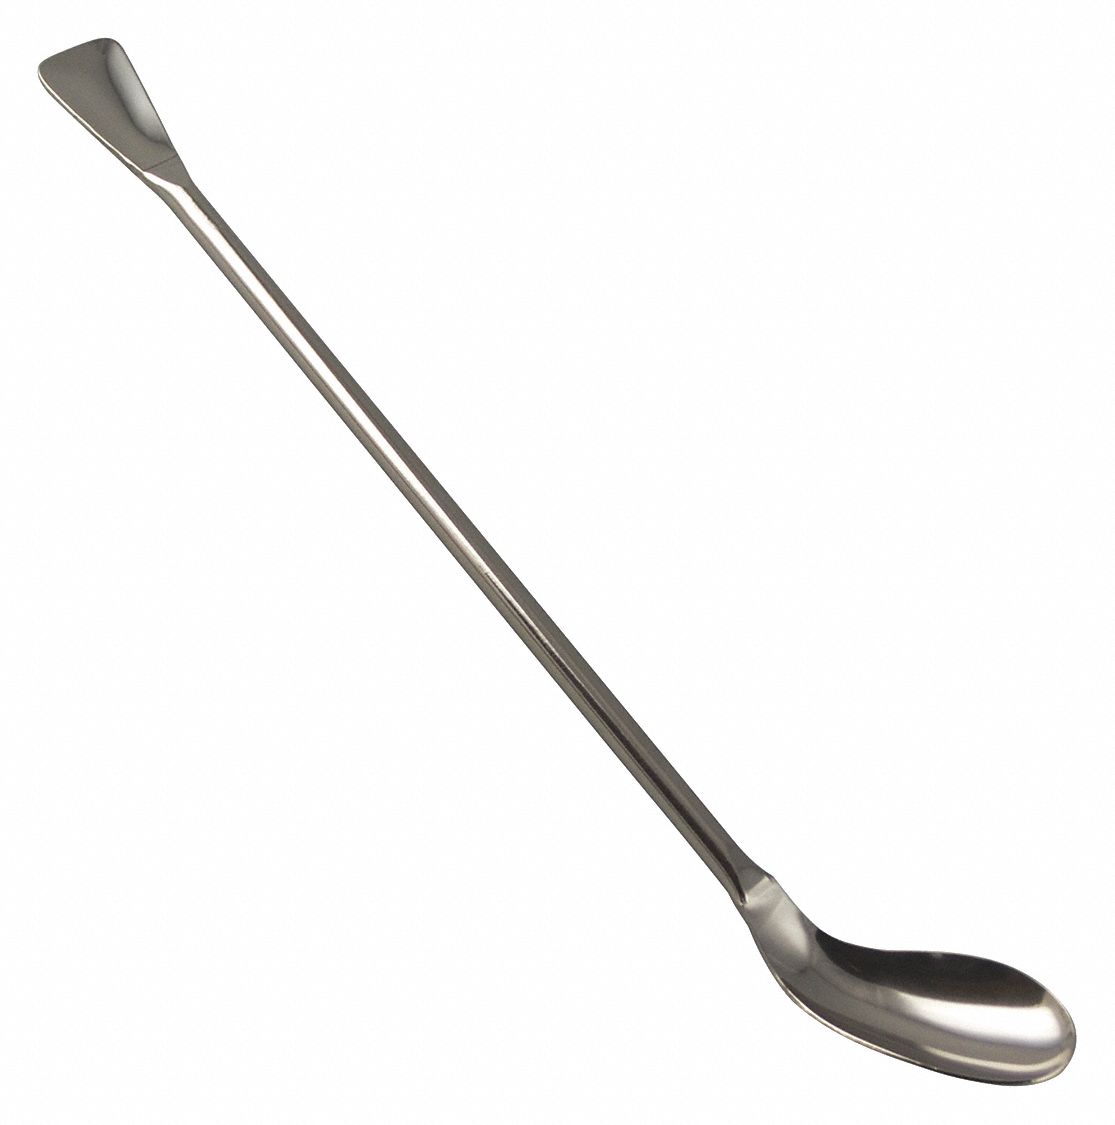 lab spoon spatula